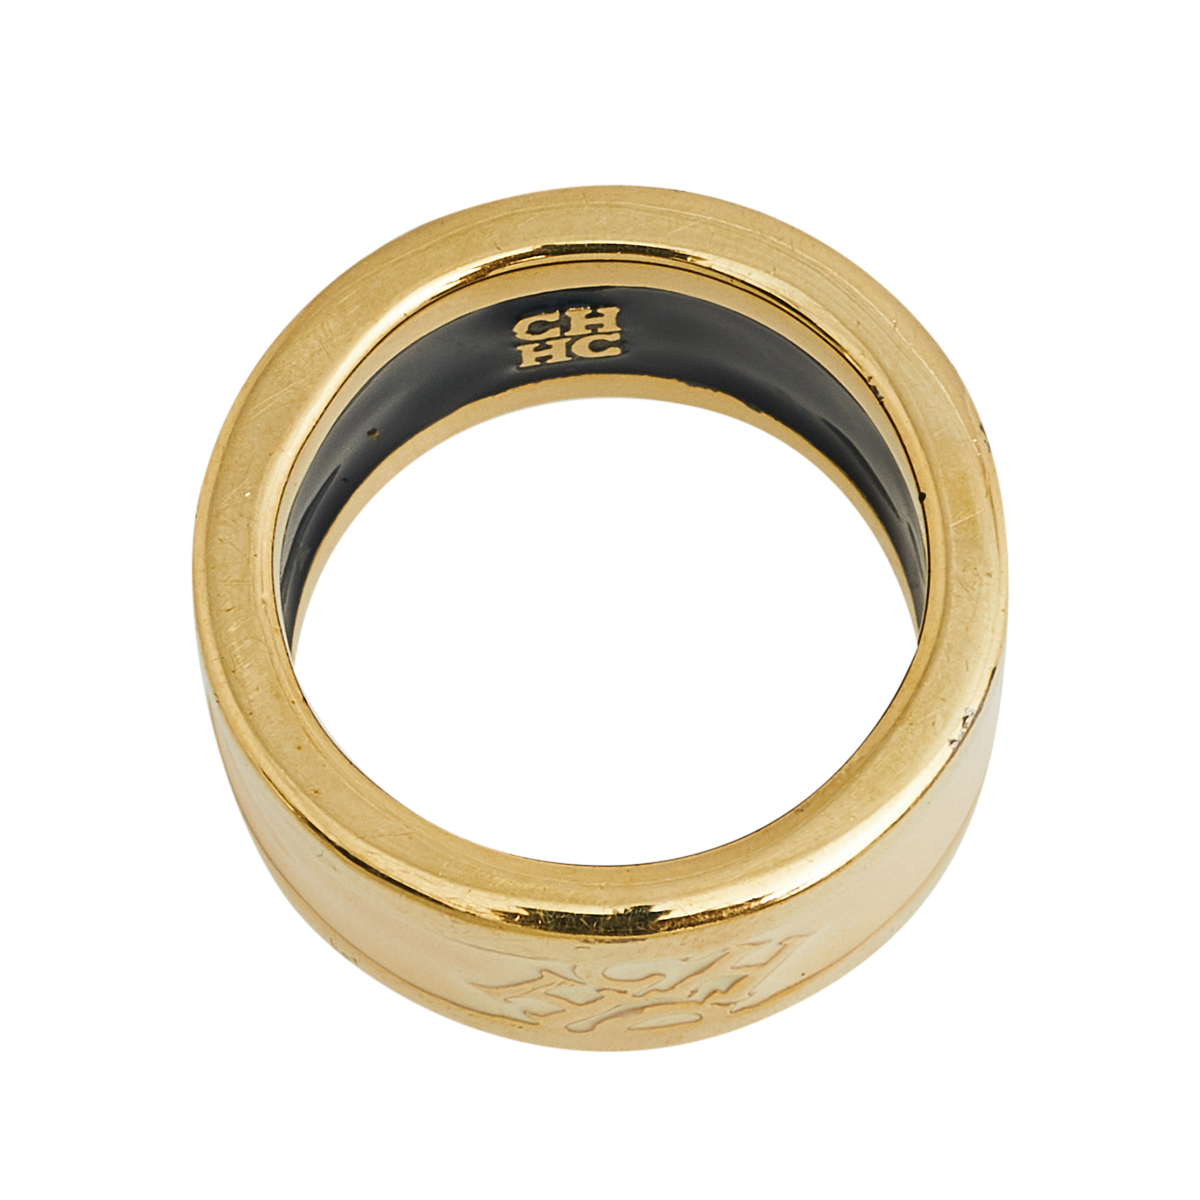 CH Carolina Herrera Cream Enamel Gold Tone Band Ring Size EU 55